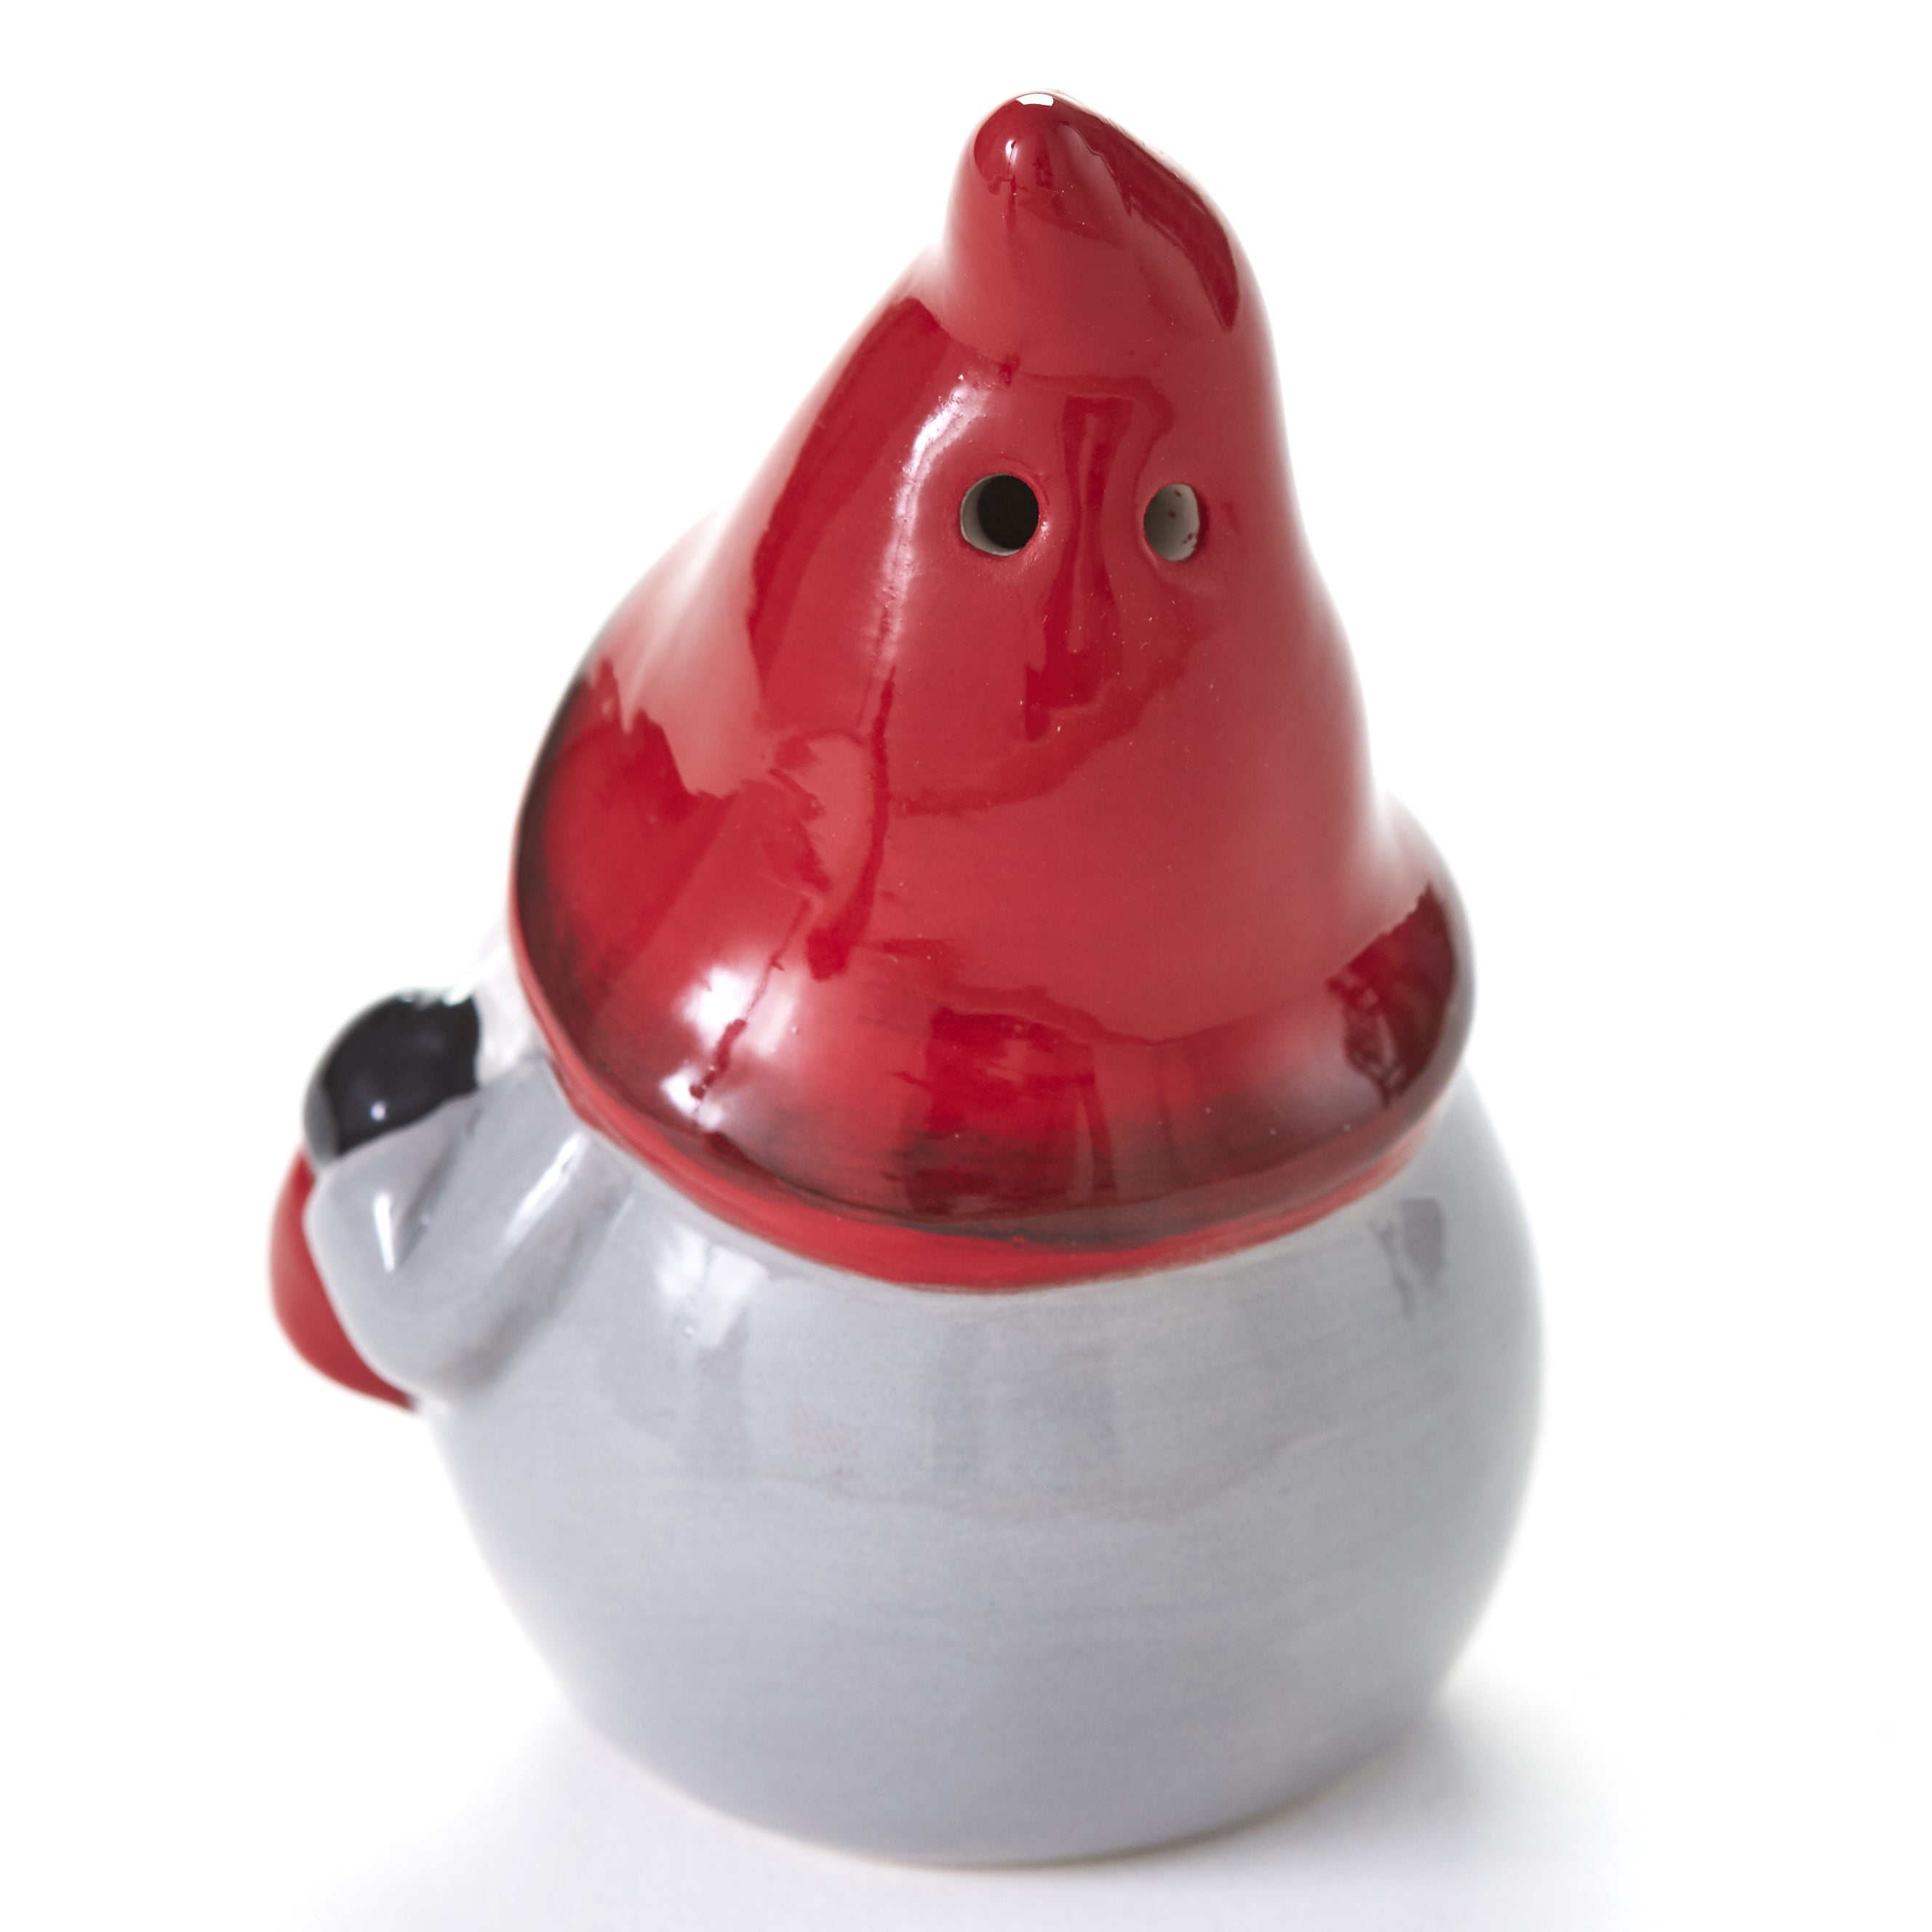 Christmas Gnome Salt/Pepper Shakers Set - Item 501225